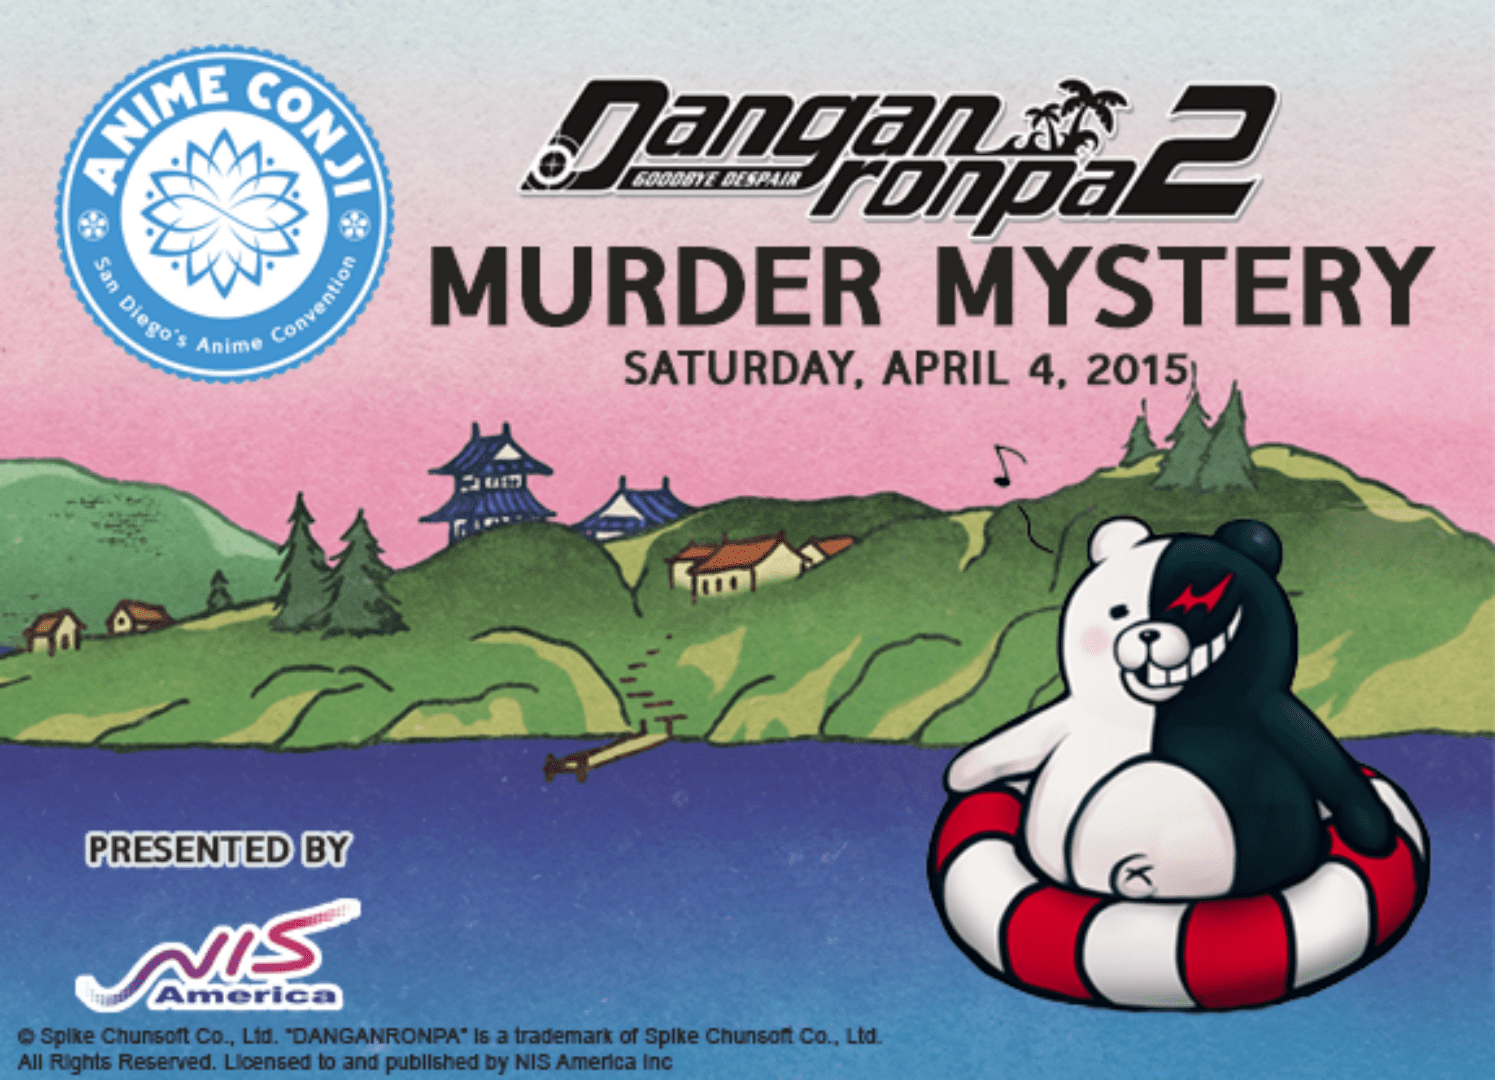 DanganRonpa Murder Mystery Event at Anime Conji 2015